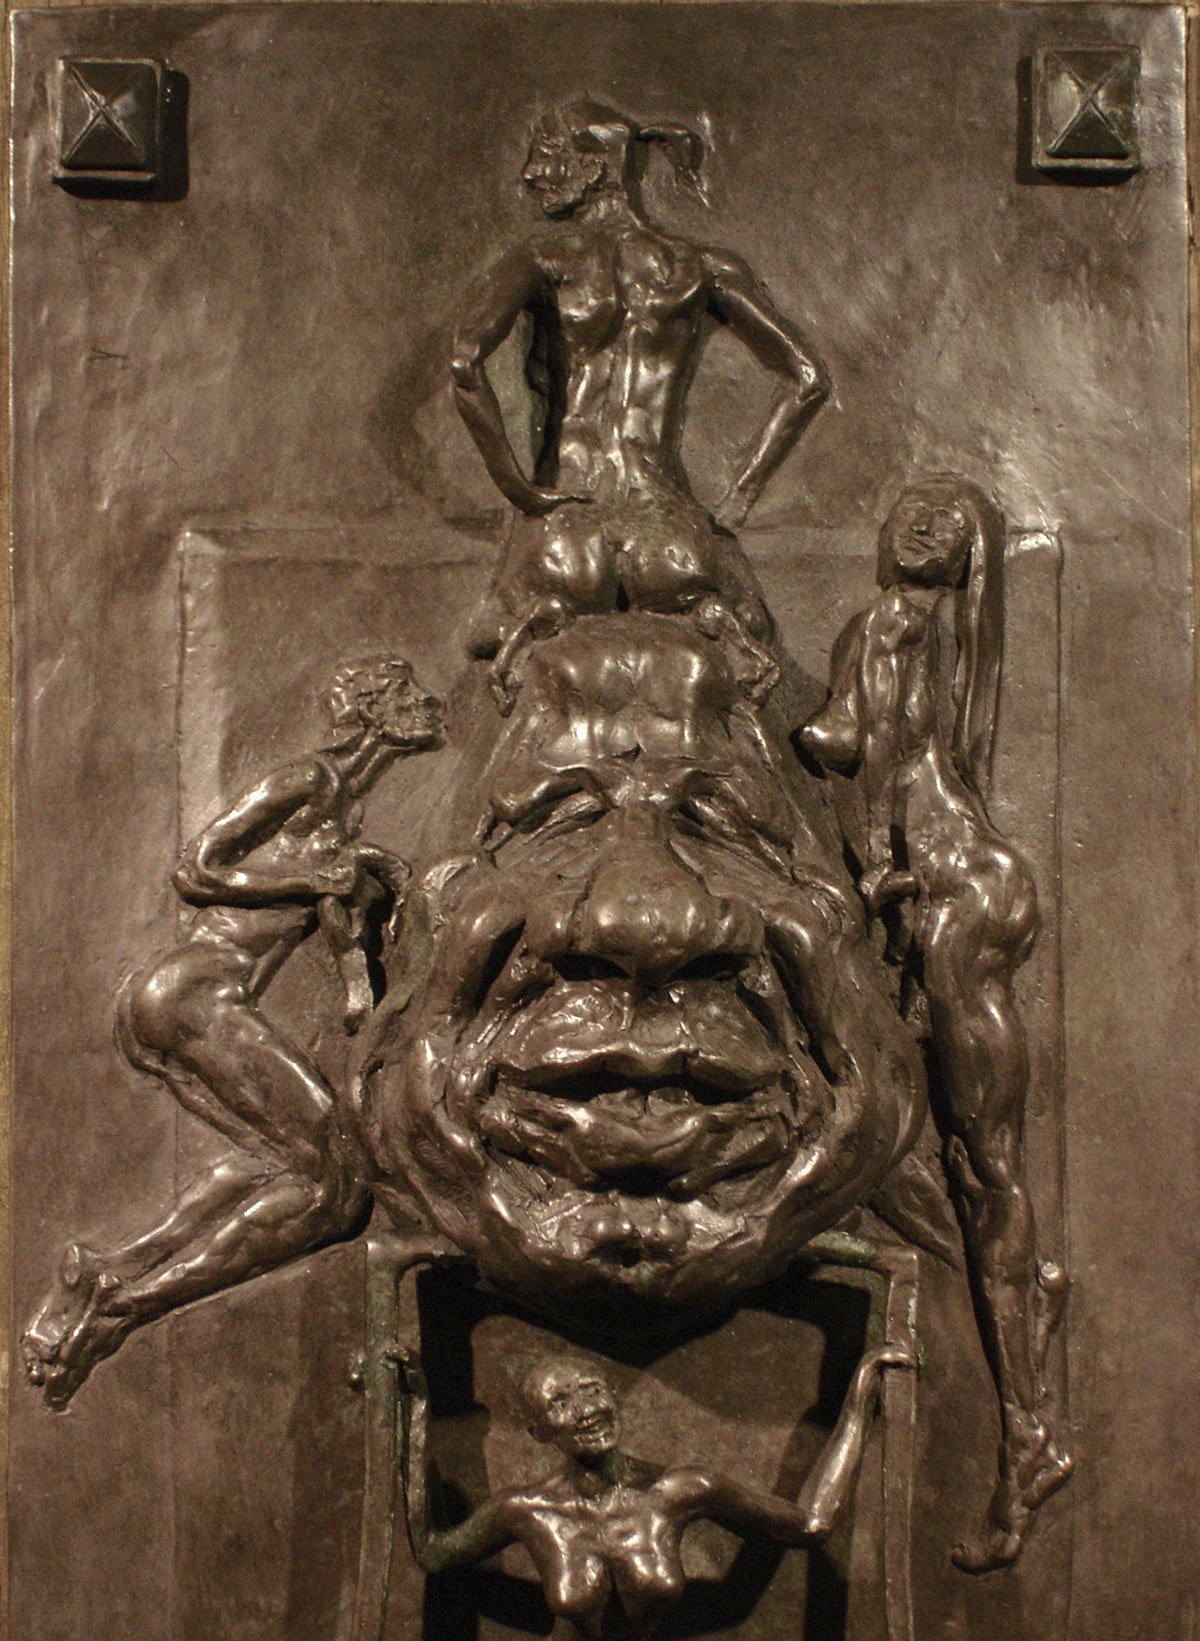 WHAT OF FREUDS LIBIDO THEORY? Bronze High relief (door knocker) detail one